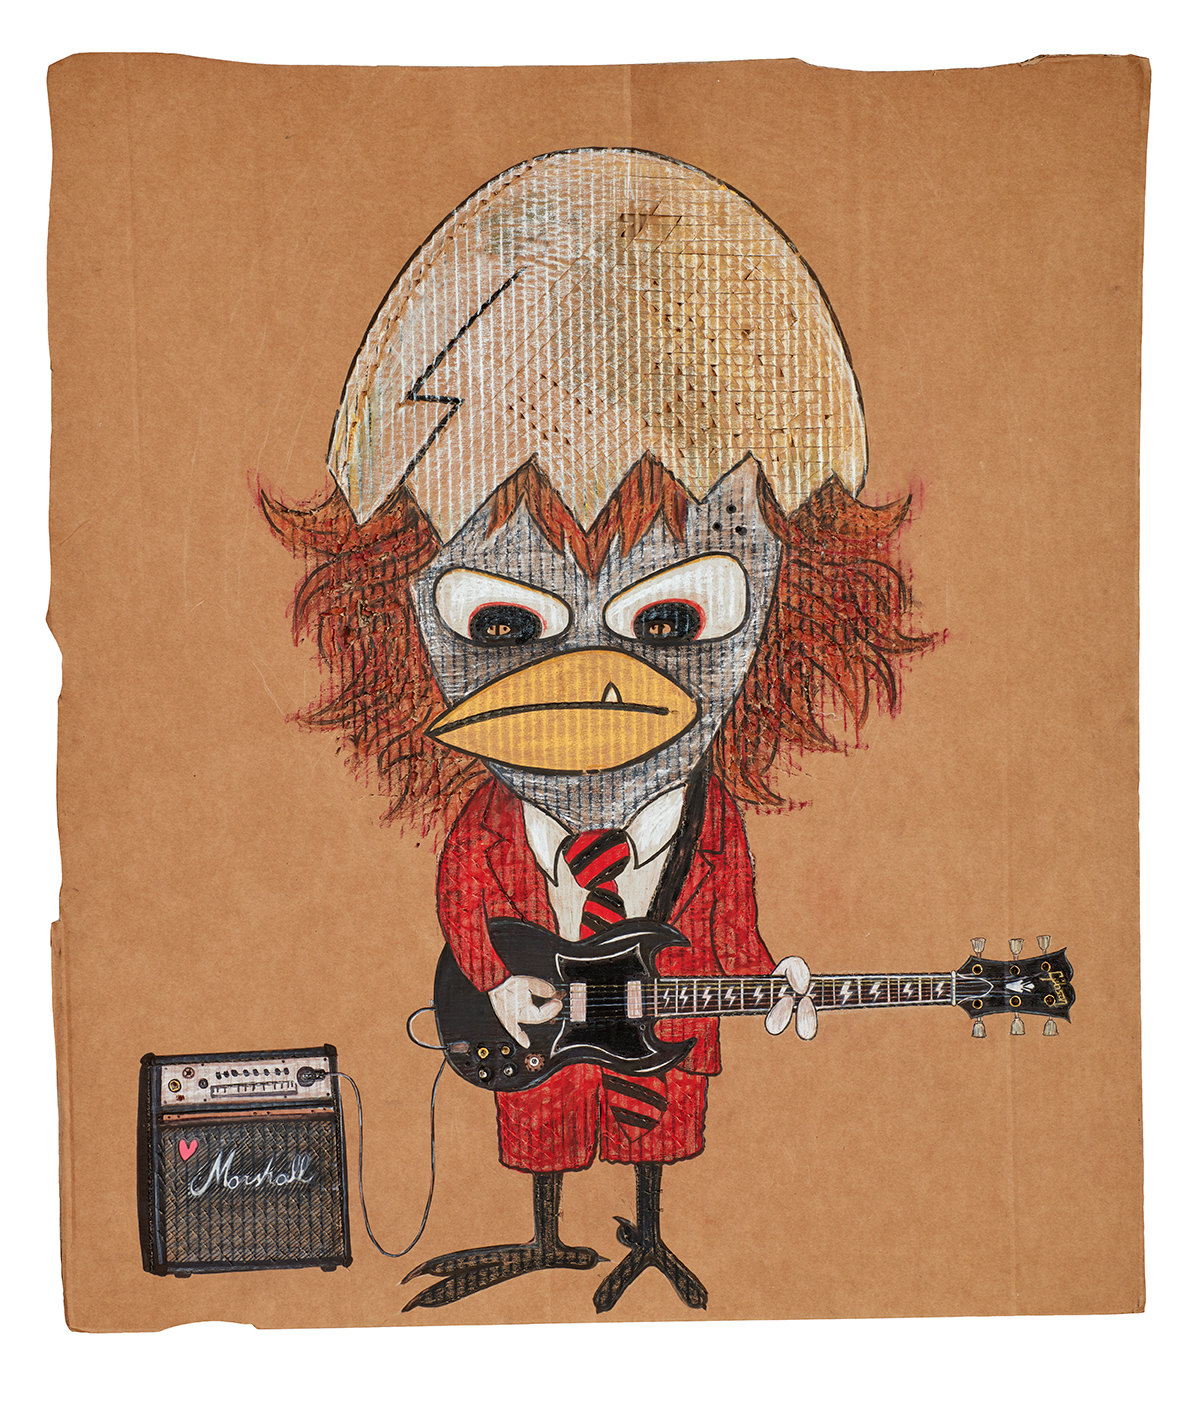 Angus Young “Angry Birds”, 2015 